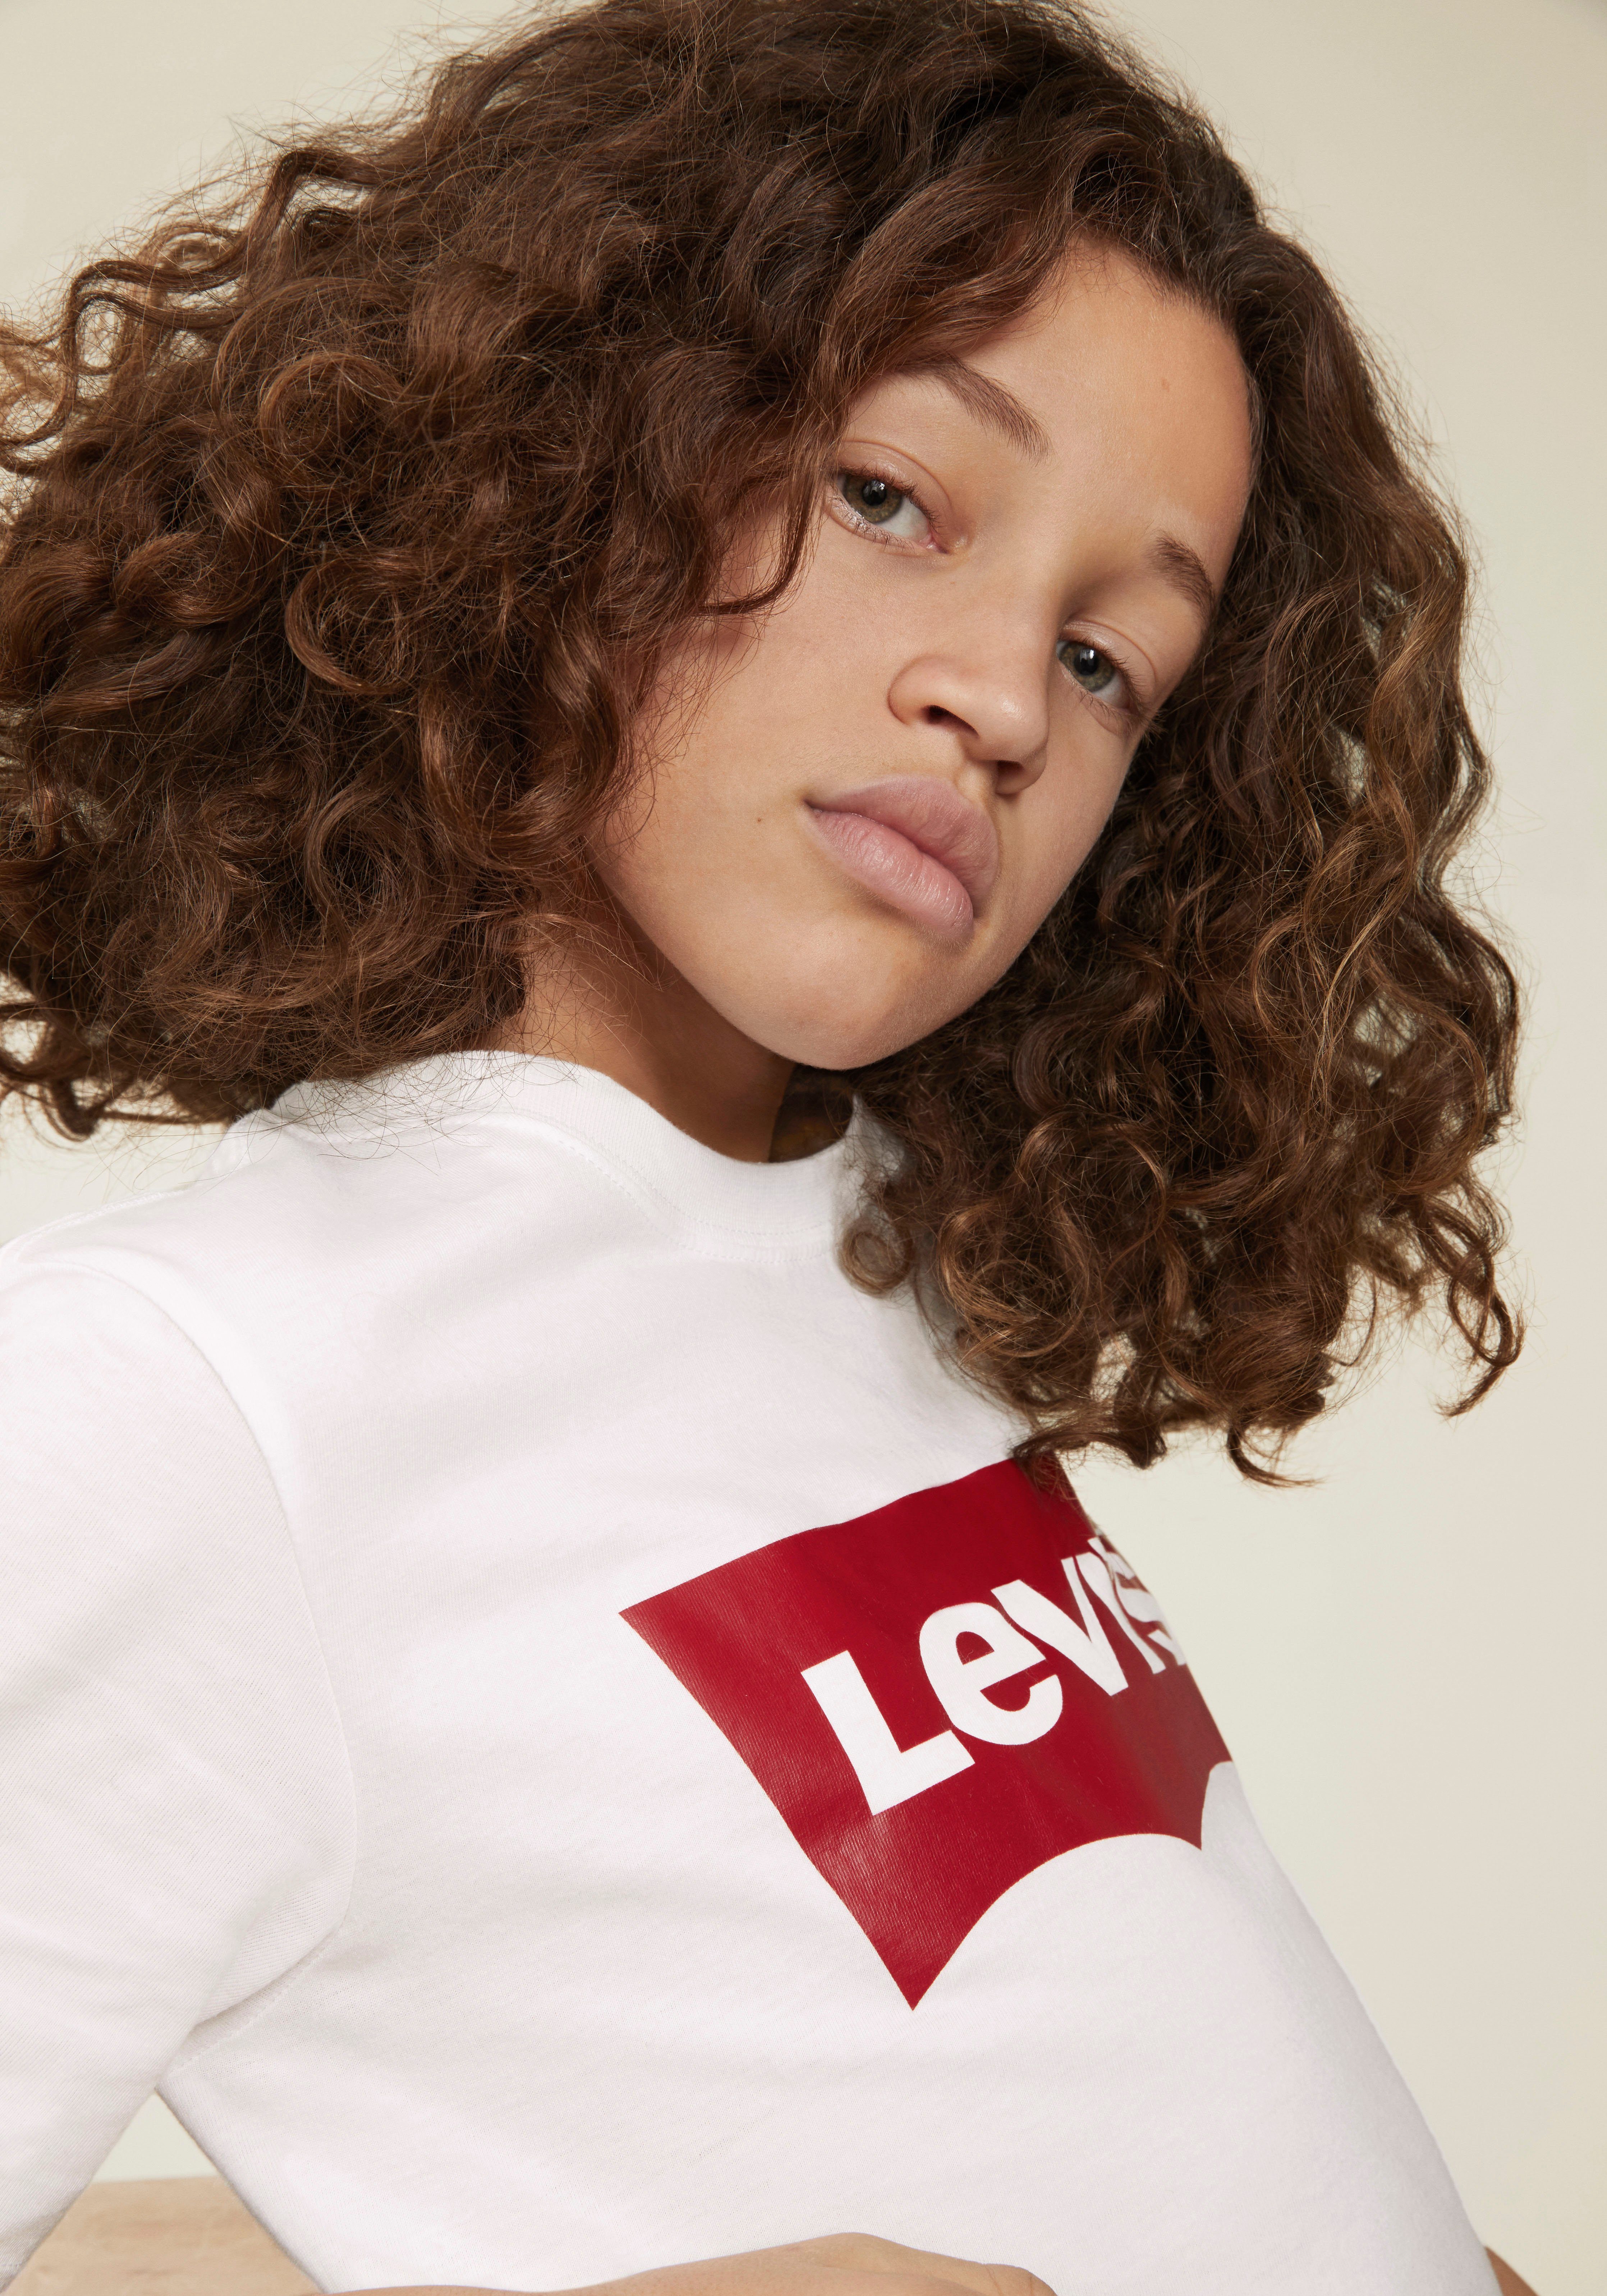 Levi's® Kids T-Shirt LVB BOYS for BATWING weiß TEE